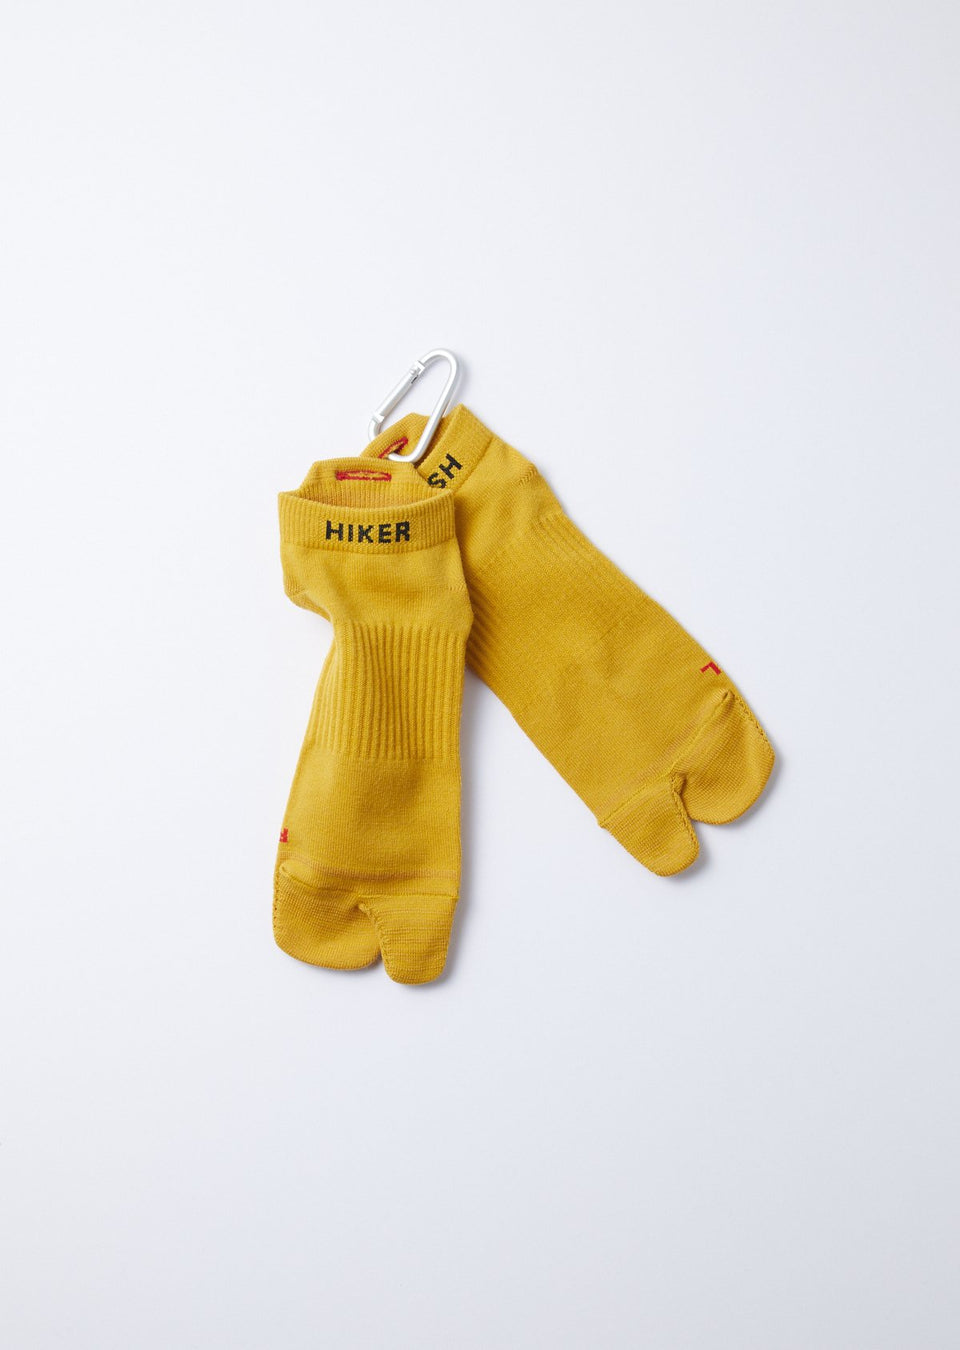 Zen Socks "Hike & Run" – Merino-ull